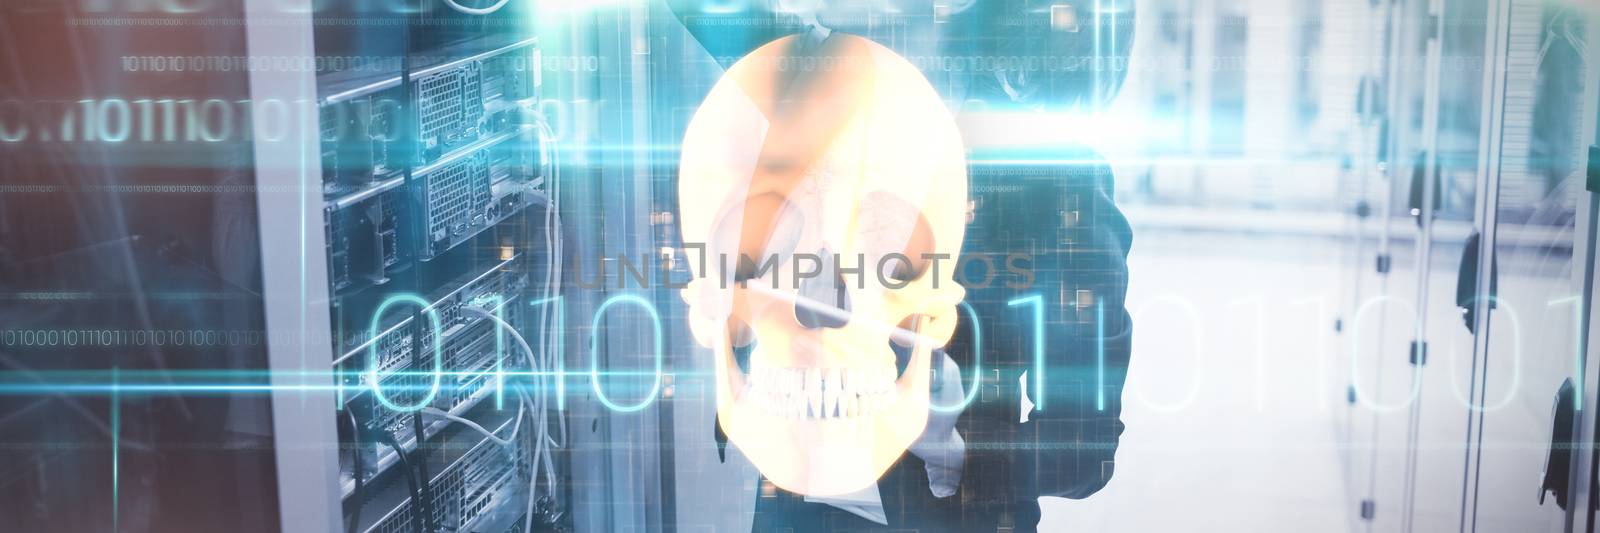 Composite image of orange human skull by Wavebreakmedia